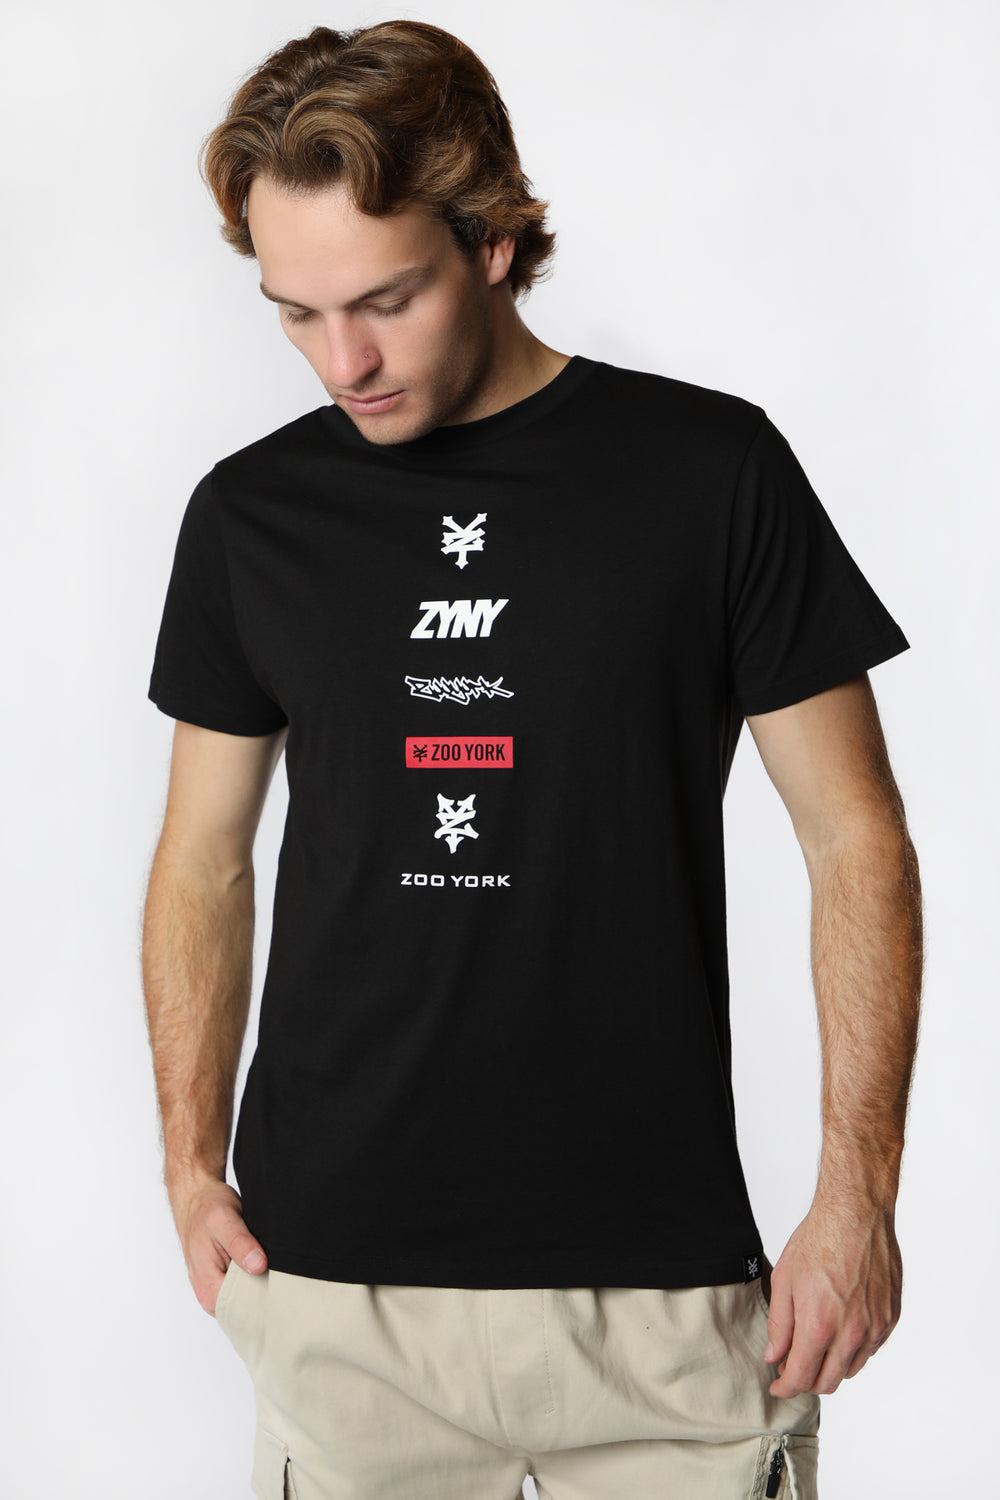 T-Shirt Imprimés Logos Zoo York Homme T-Shirt Imprimés Logos Zoo York Homme